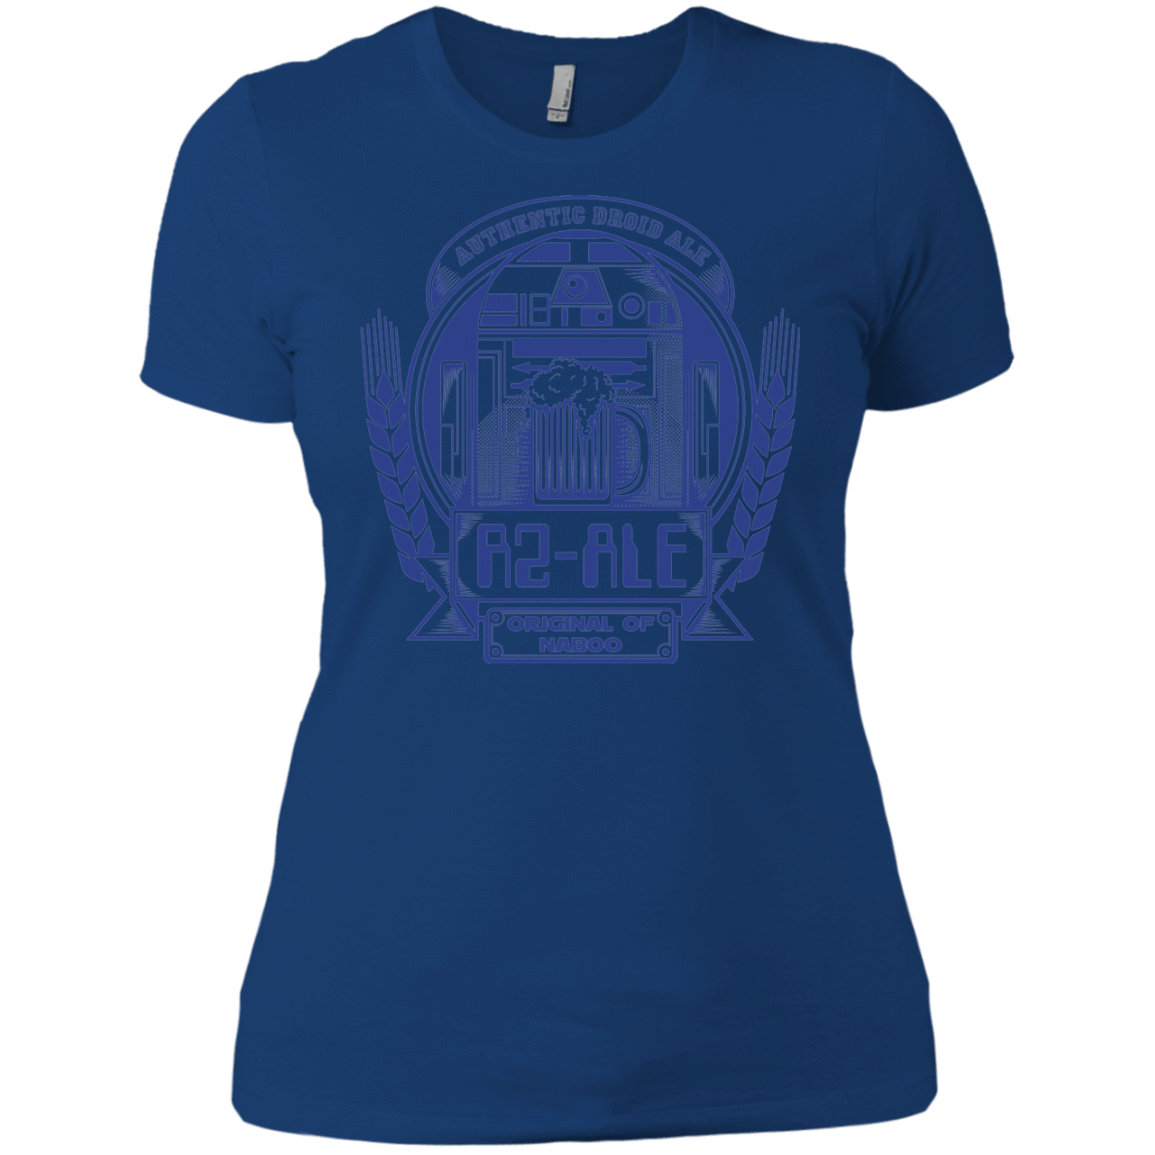 T-Shirts Royal / X-Small R2 Ale Women's Premium T-Shirt